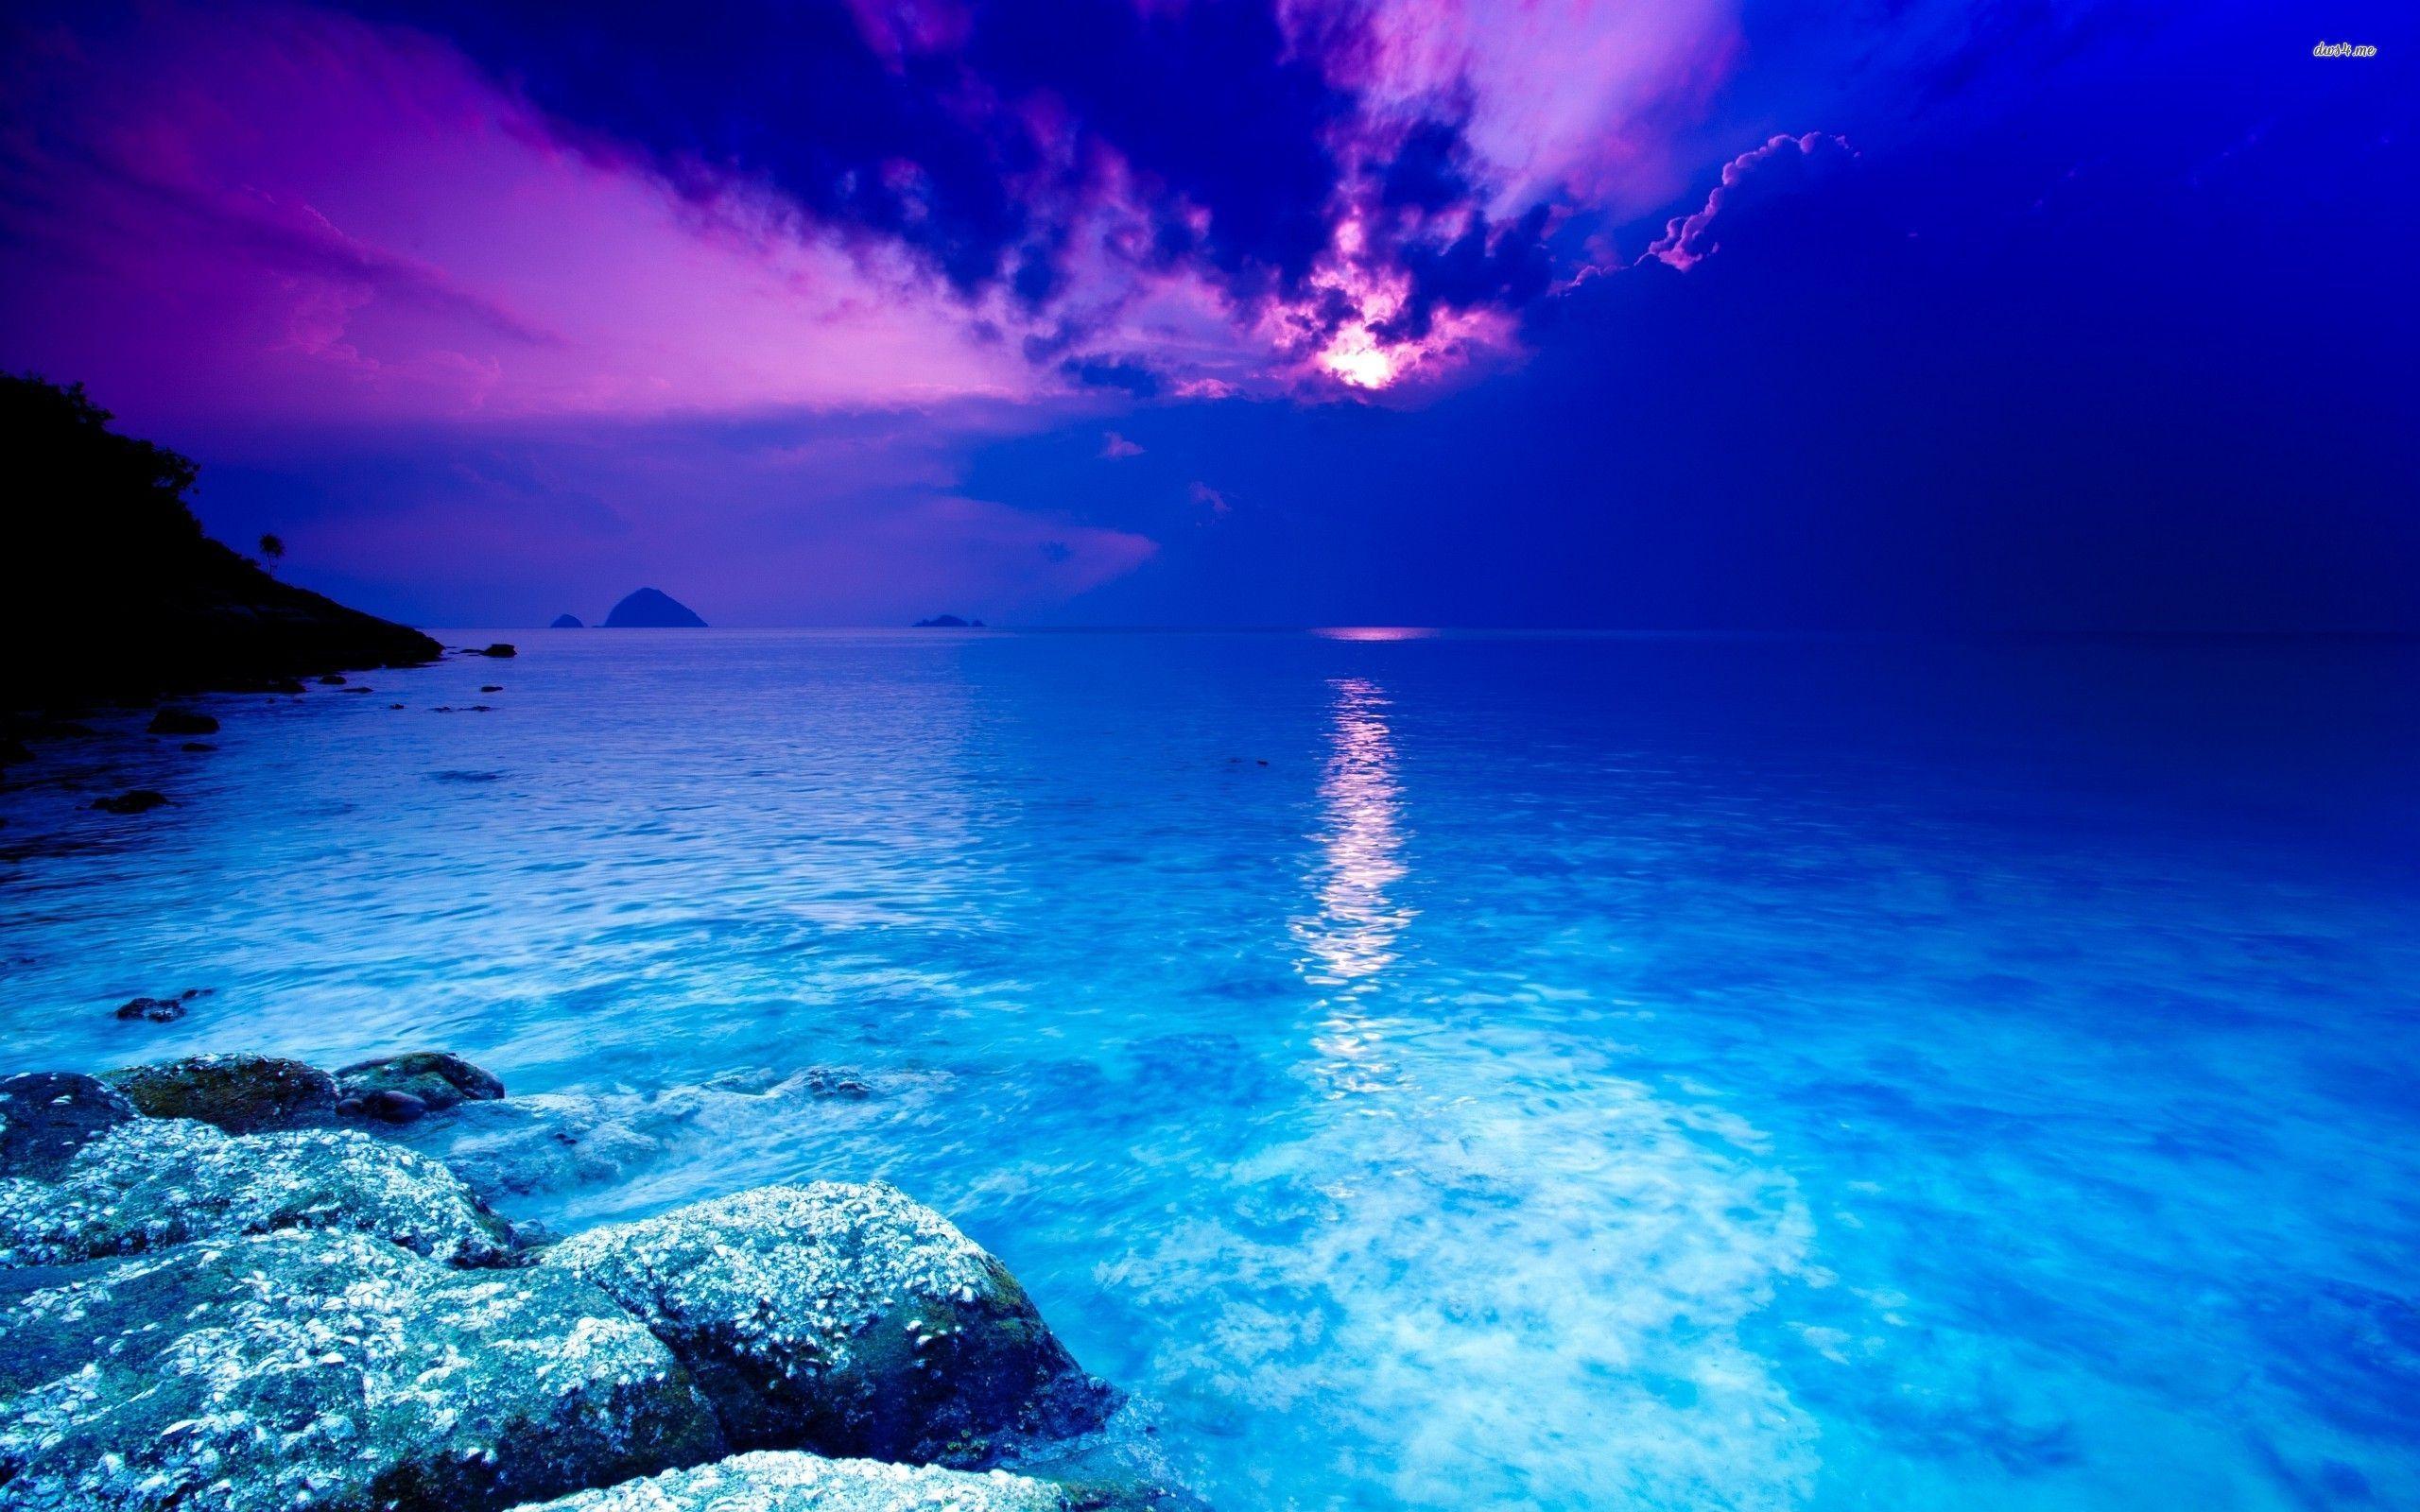 Blue sea wallpaper photos free download 11,227 .jpg files